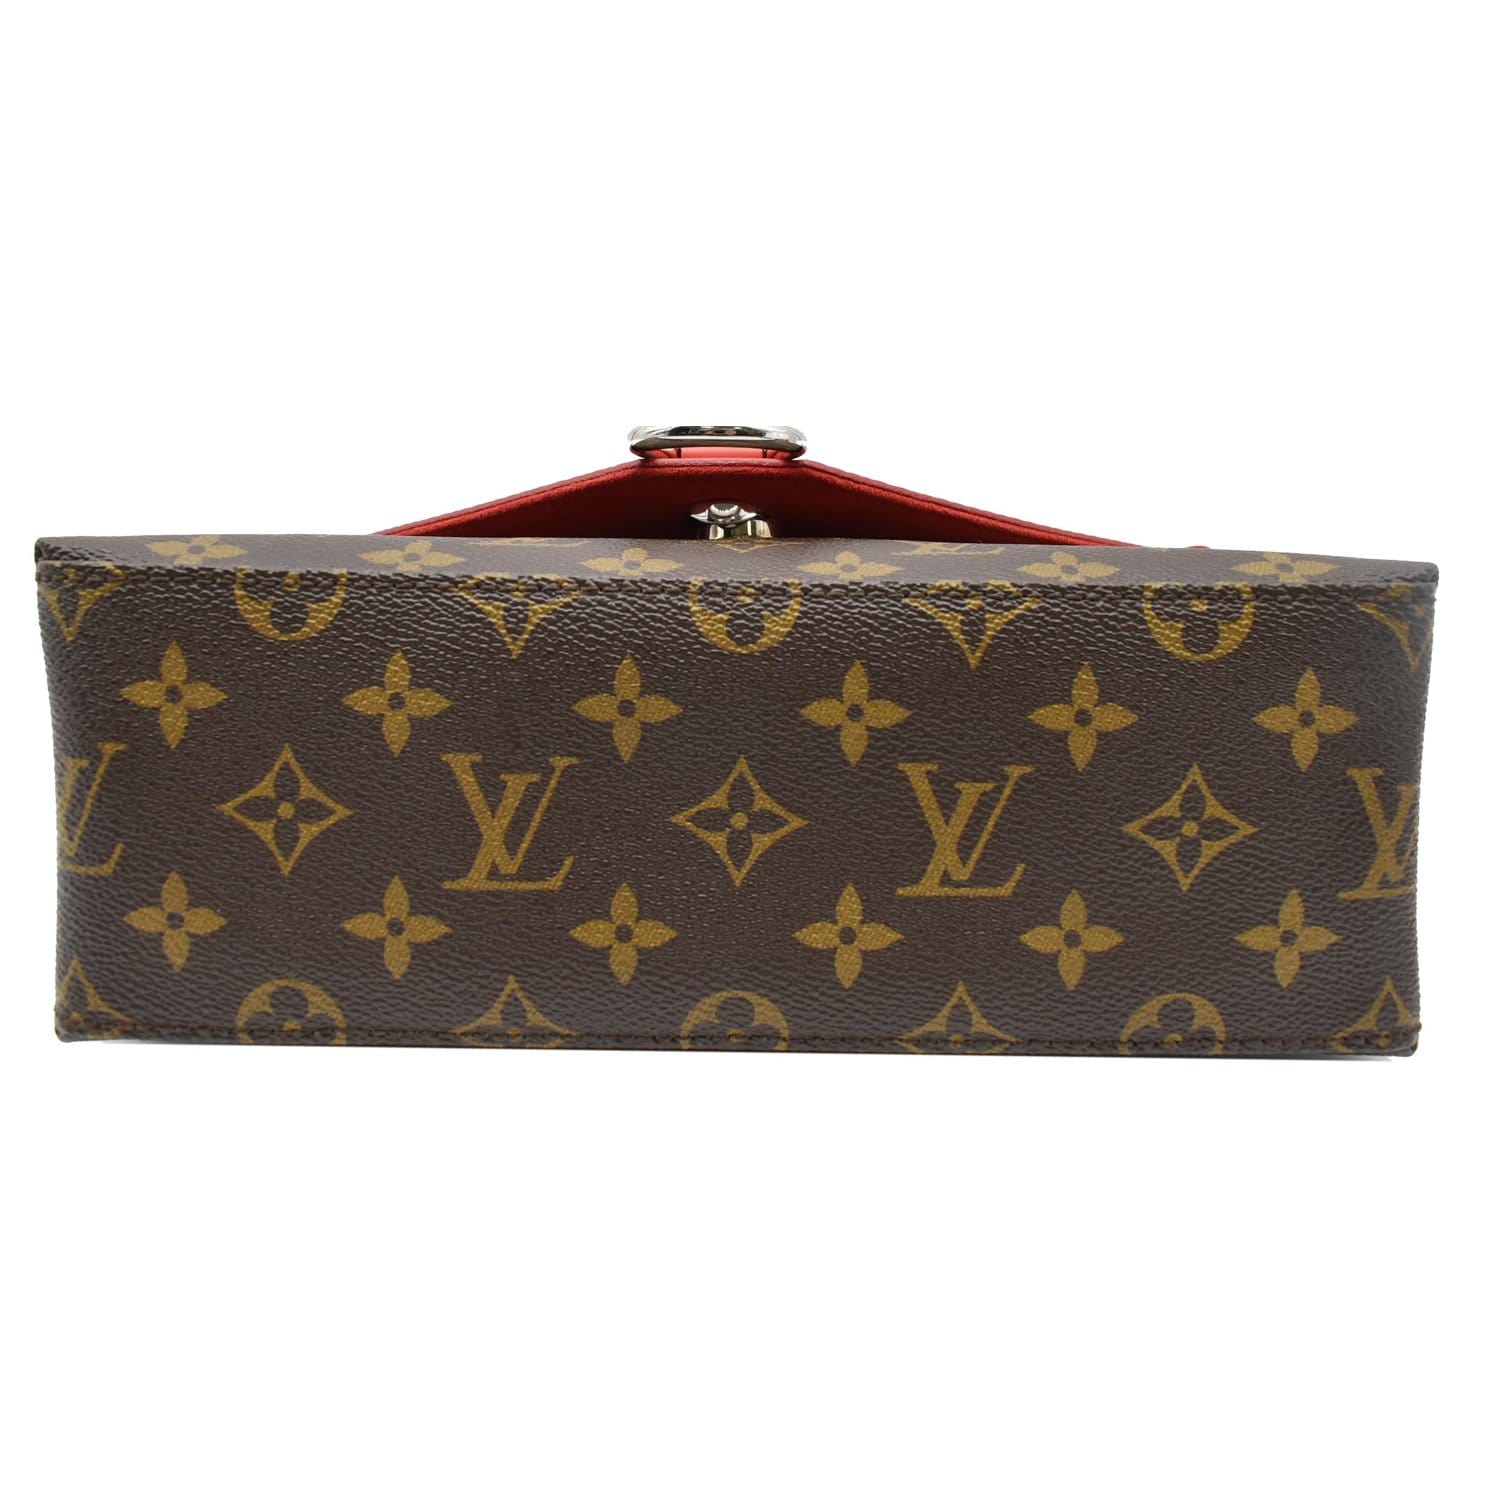 Louis Vuitton Saint Michel Handbag in Brown Monogram Canvas and Red